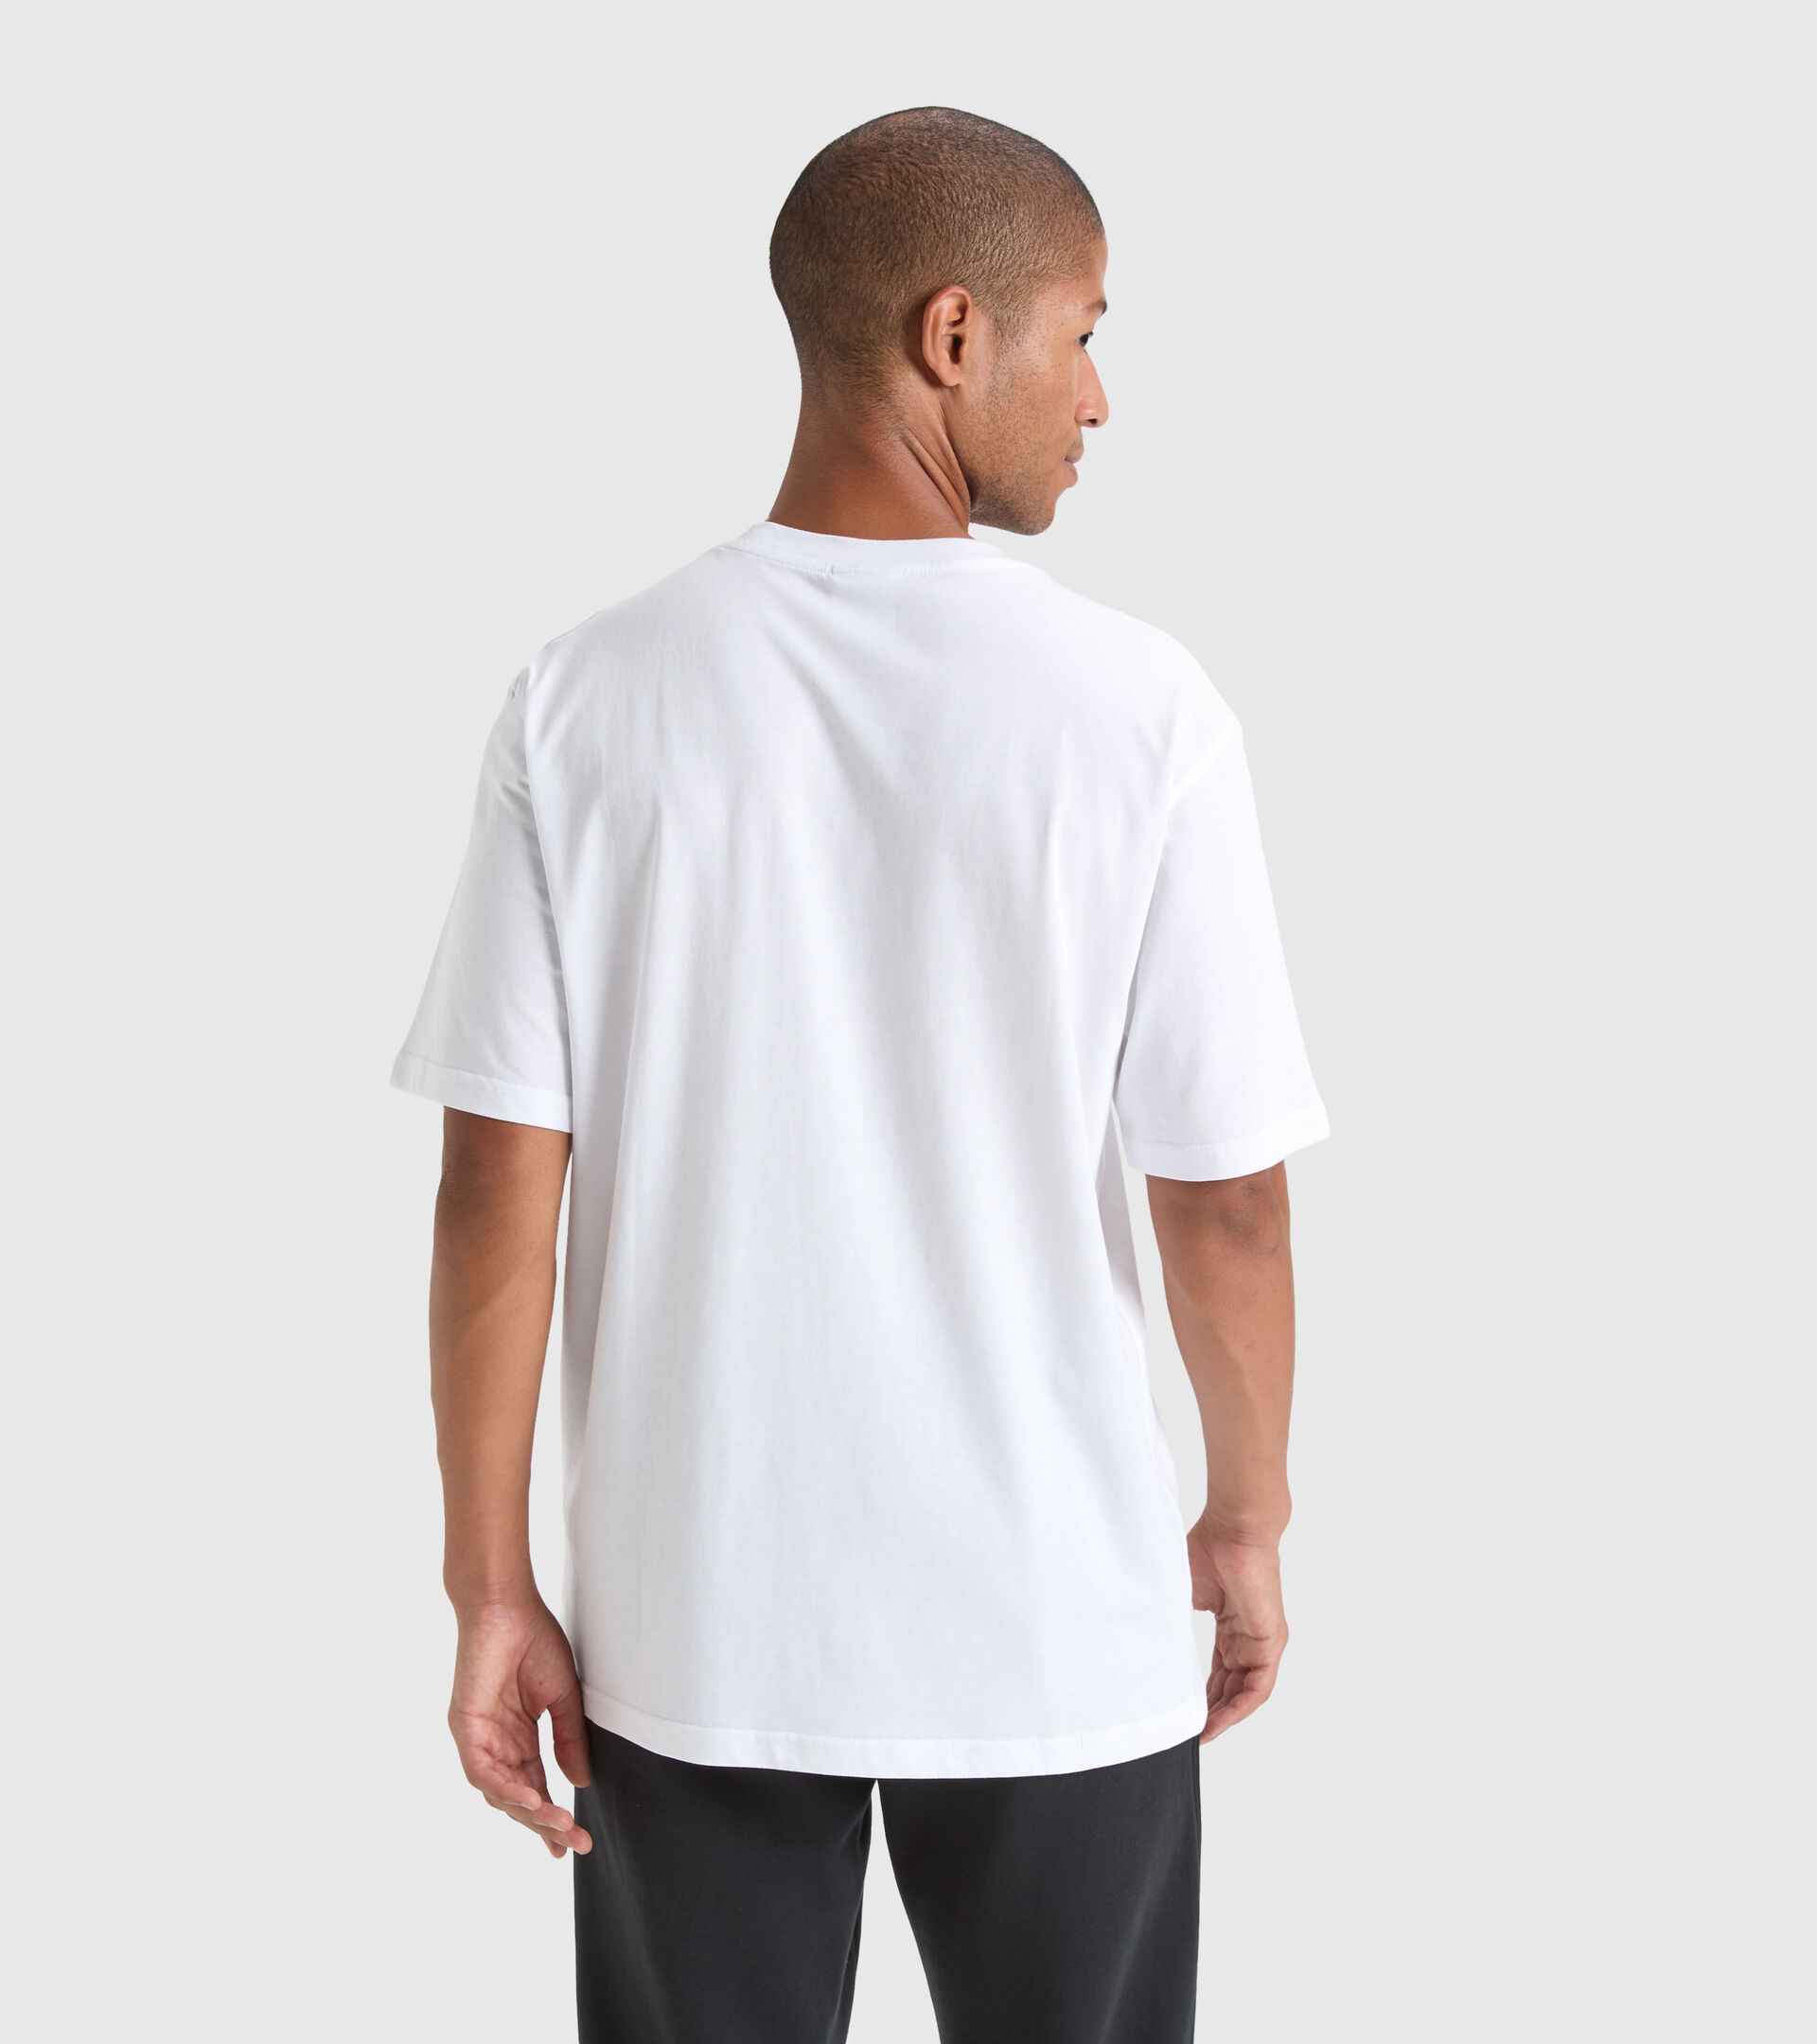 Sportliches T-Shirt Throwback - Unisex T-SHIRT SS MESSAGE STRAHLEND WEISSE - Diadora